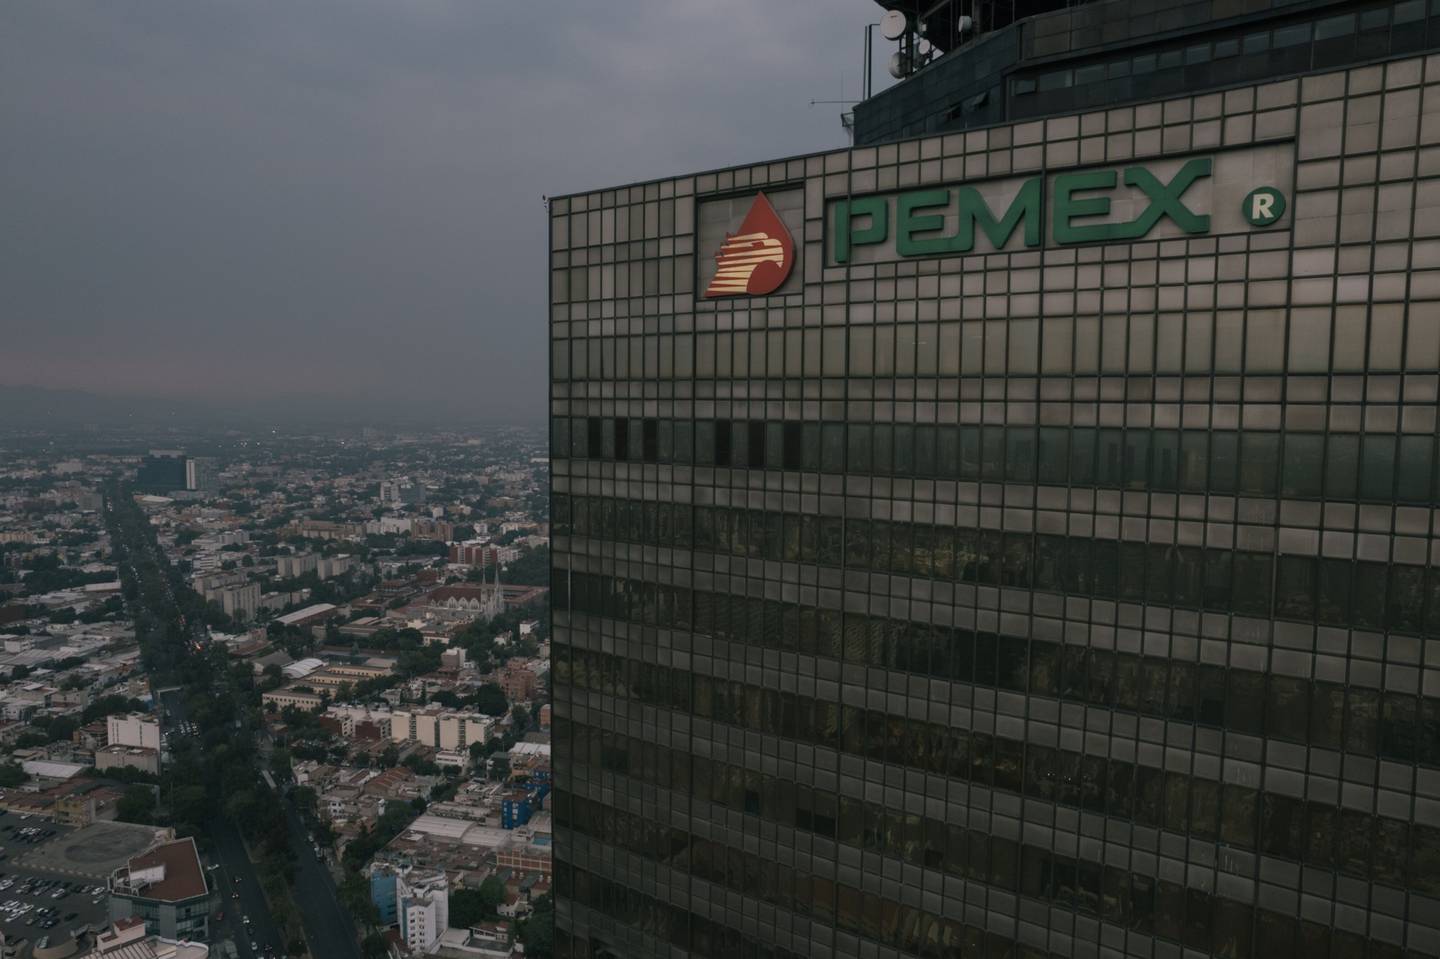 Petroleos Mexicanos (PEMEX) headquarters in Mexico City, Mexico.